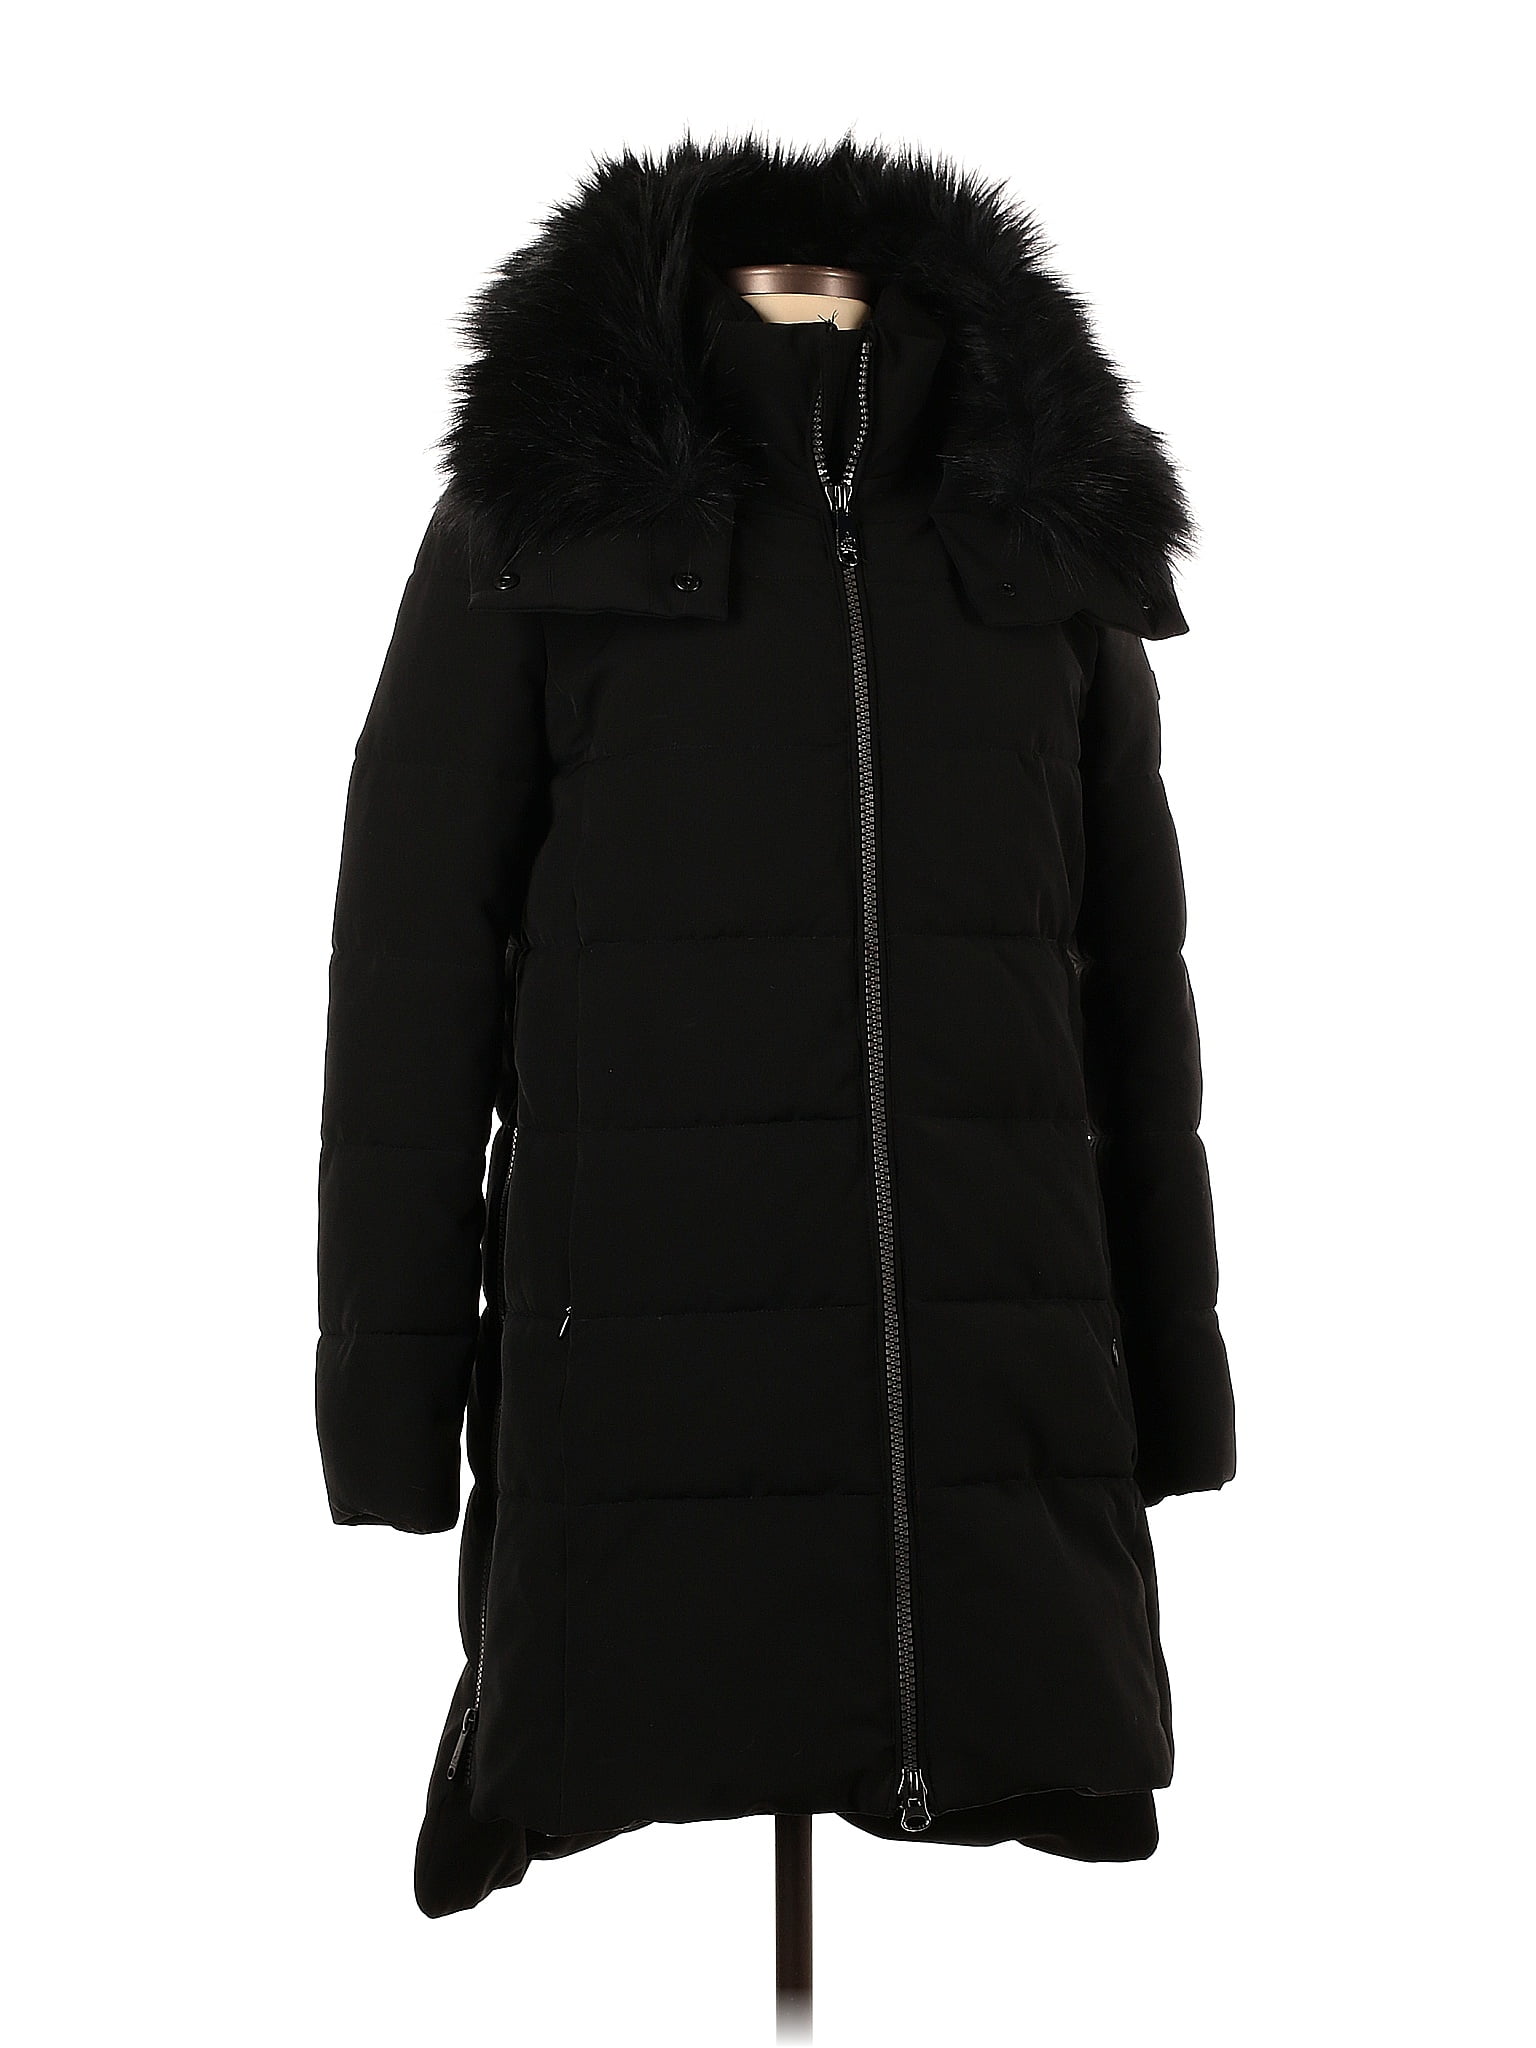 Sam Edelman Black Coat Size XS - 20% off | thredUP